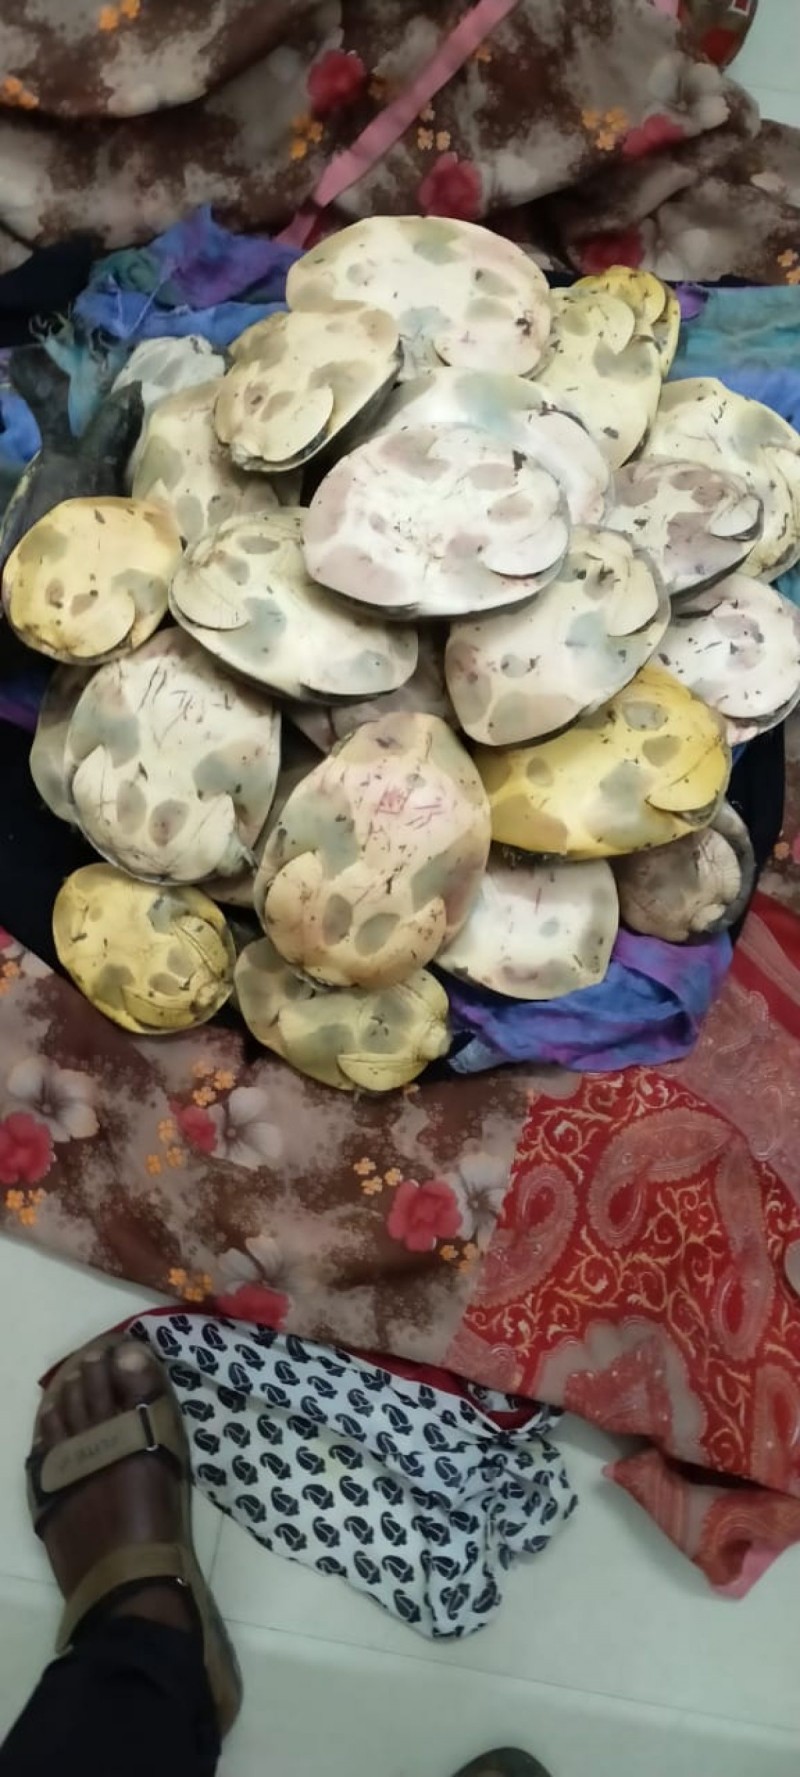 235 rare turtle species seized at Kamakhya Railway Station, Accused held